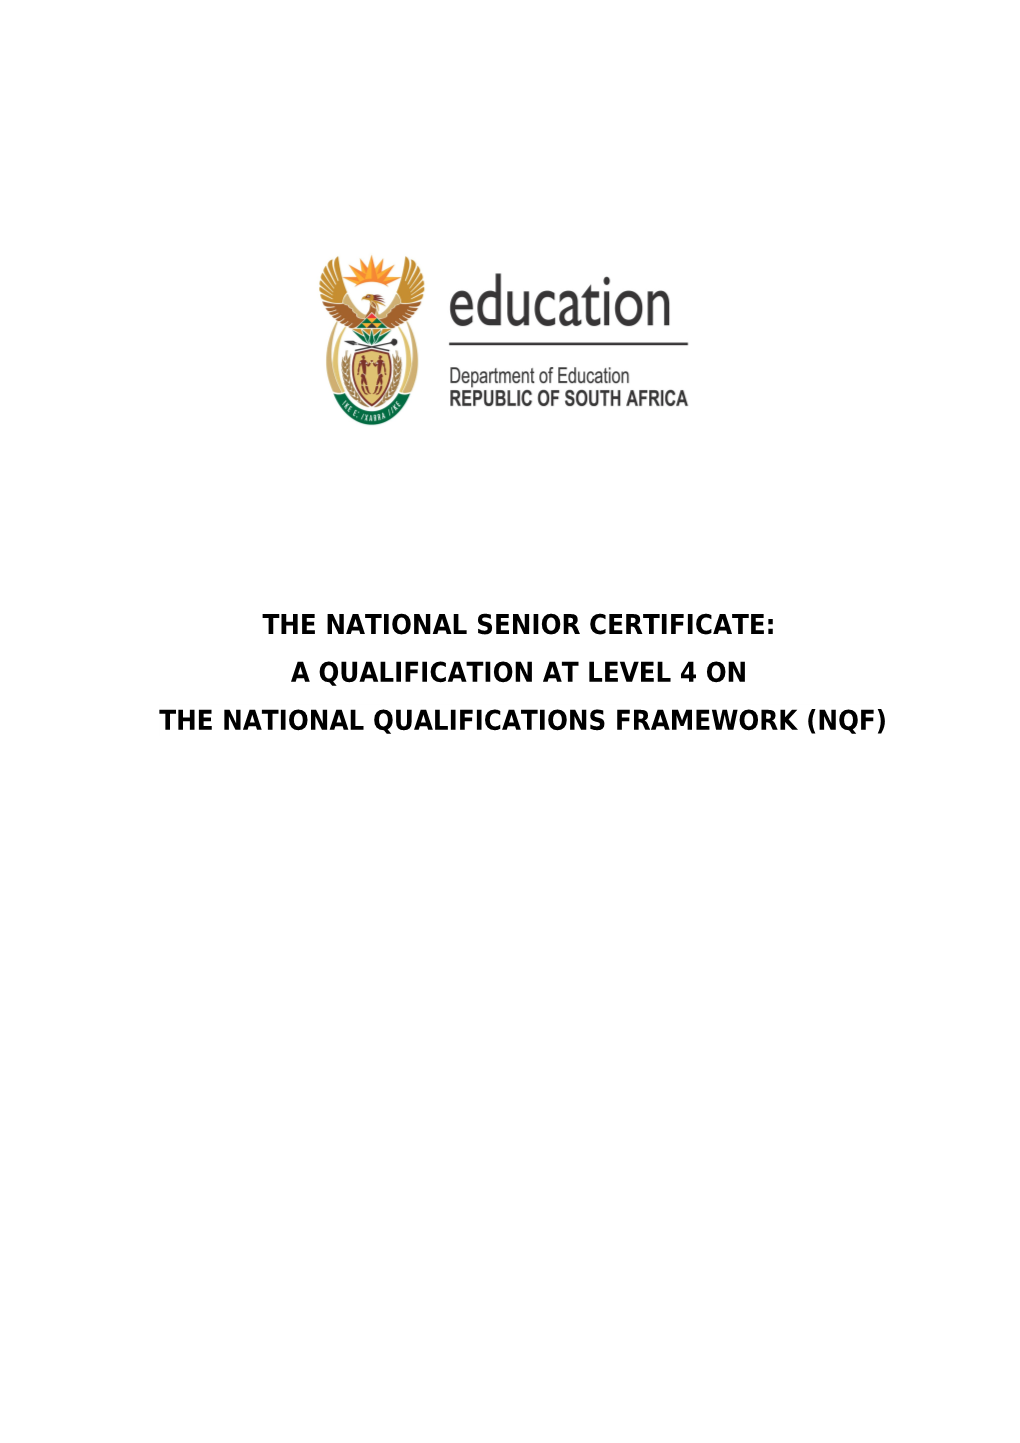 The National Senior Certificate